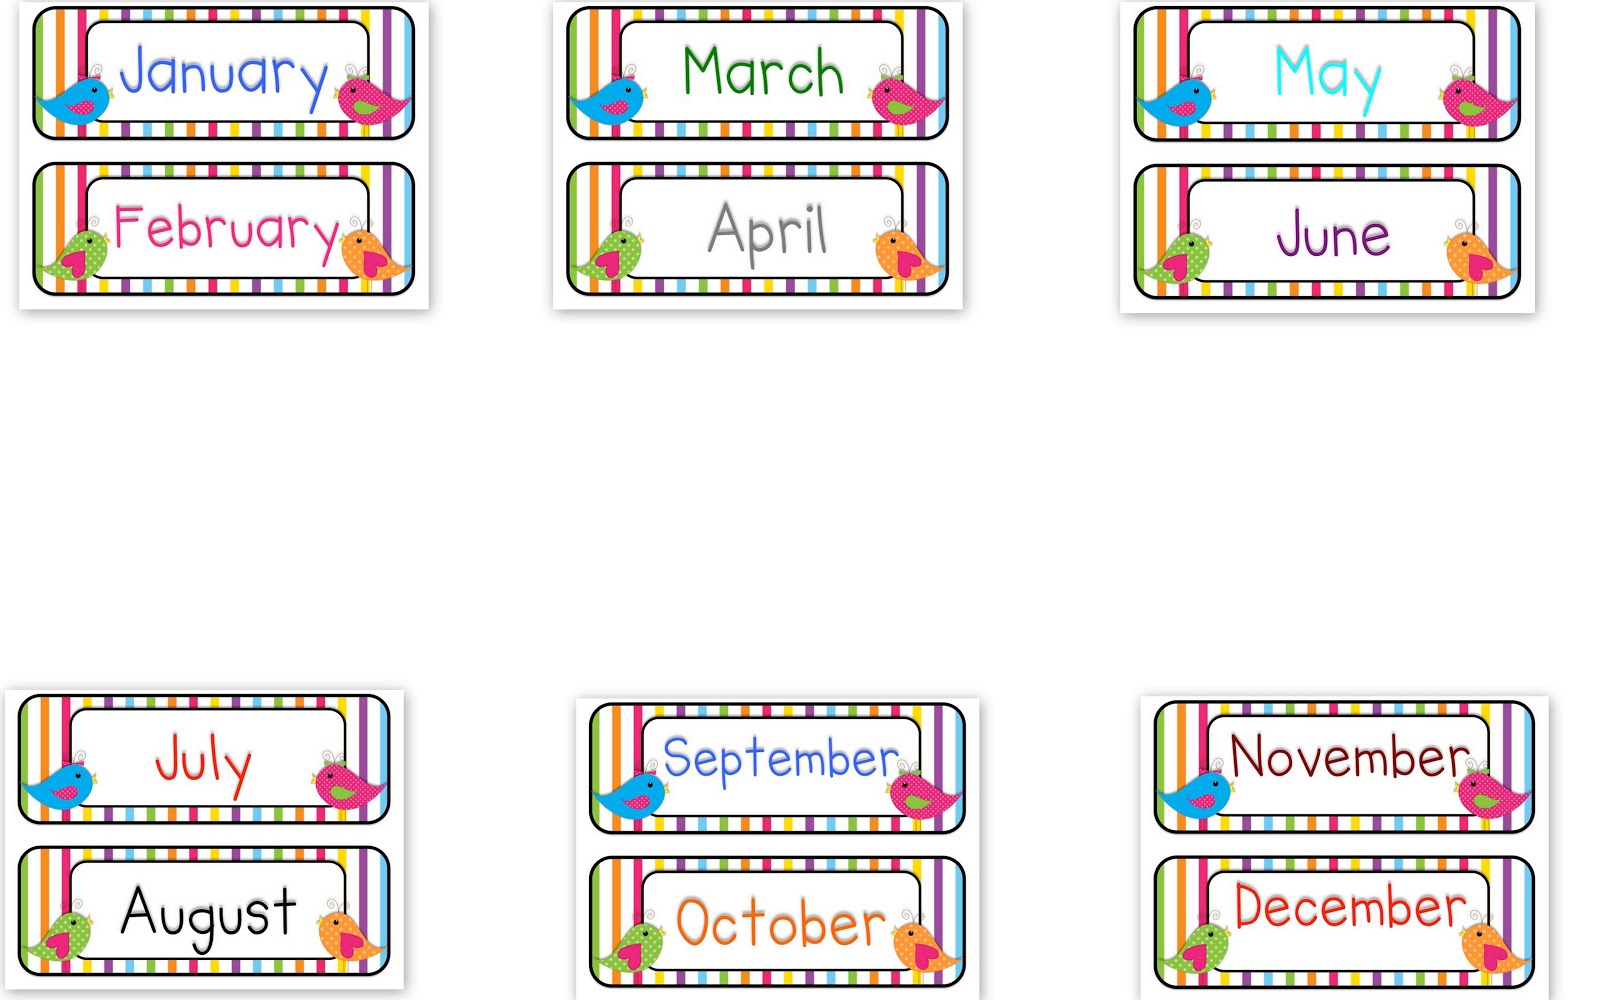 Free Preschool Cliparts Printables, Download Free Preschool Cliparts